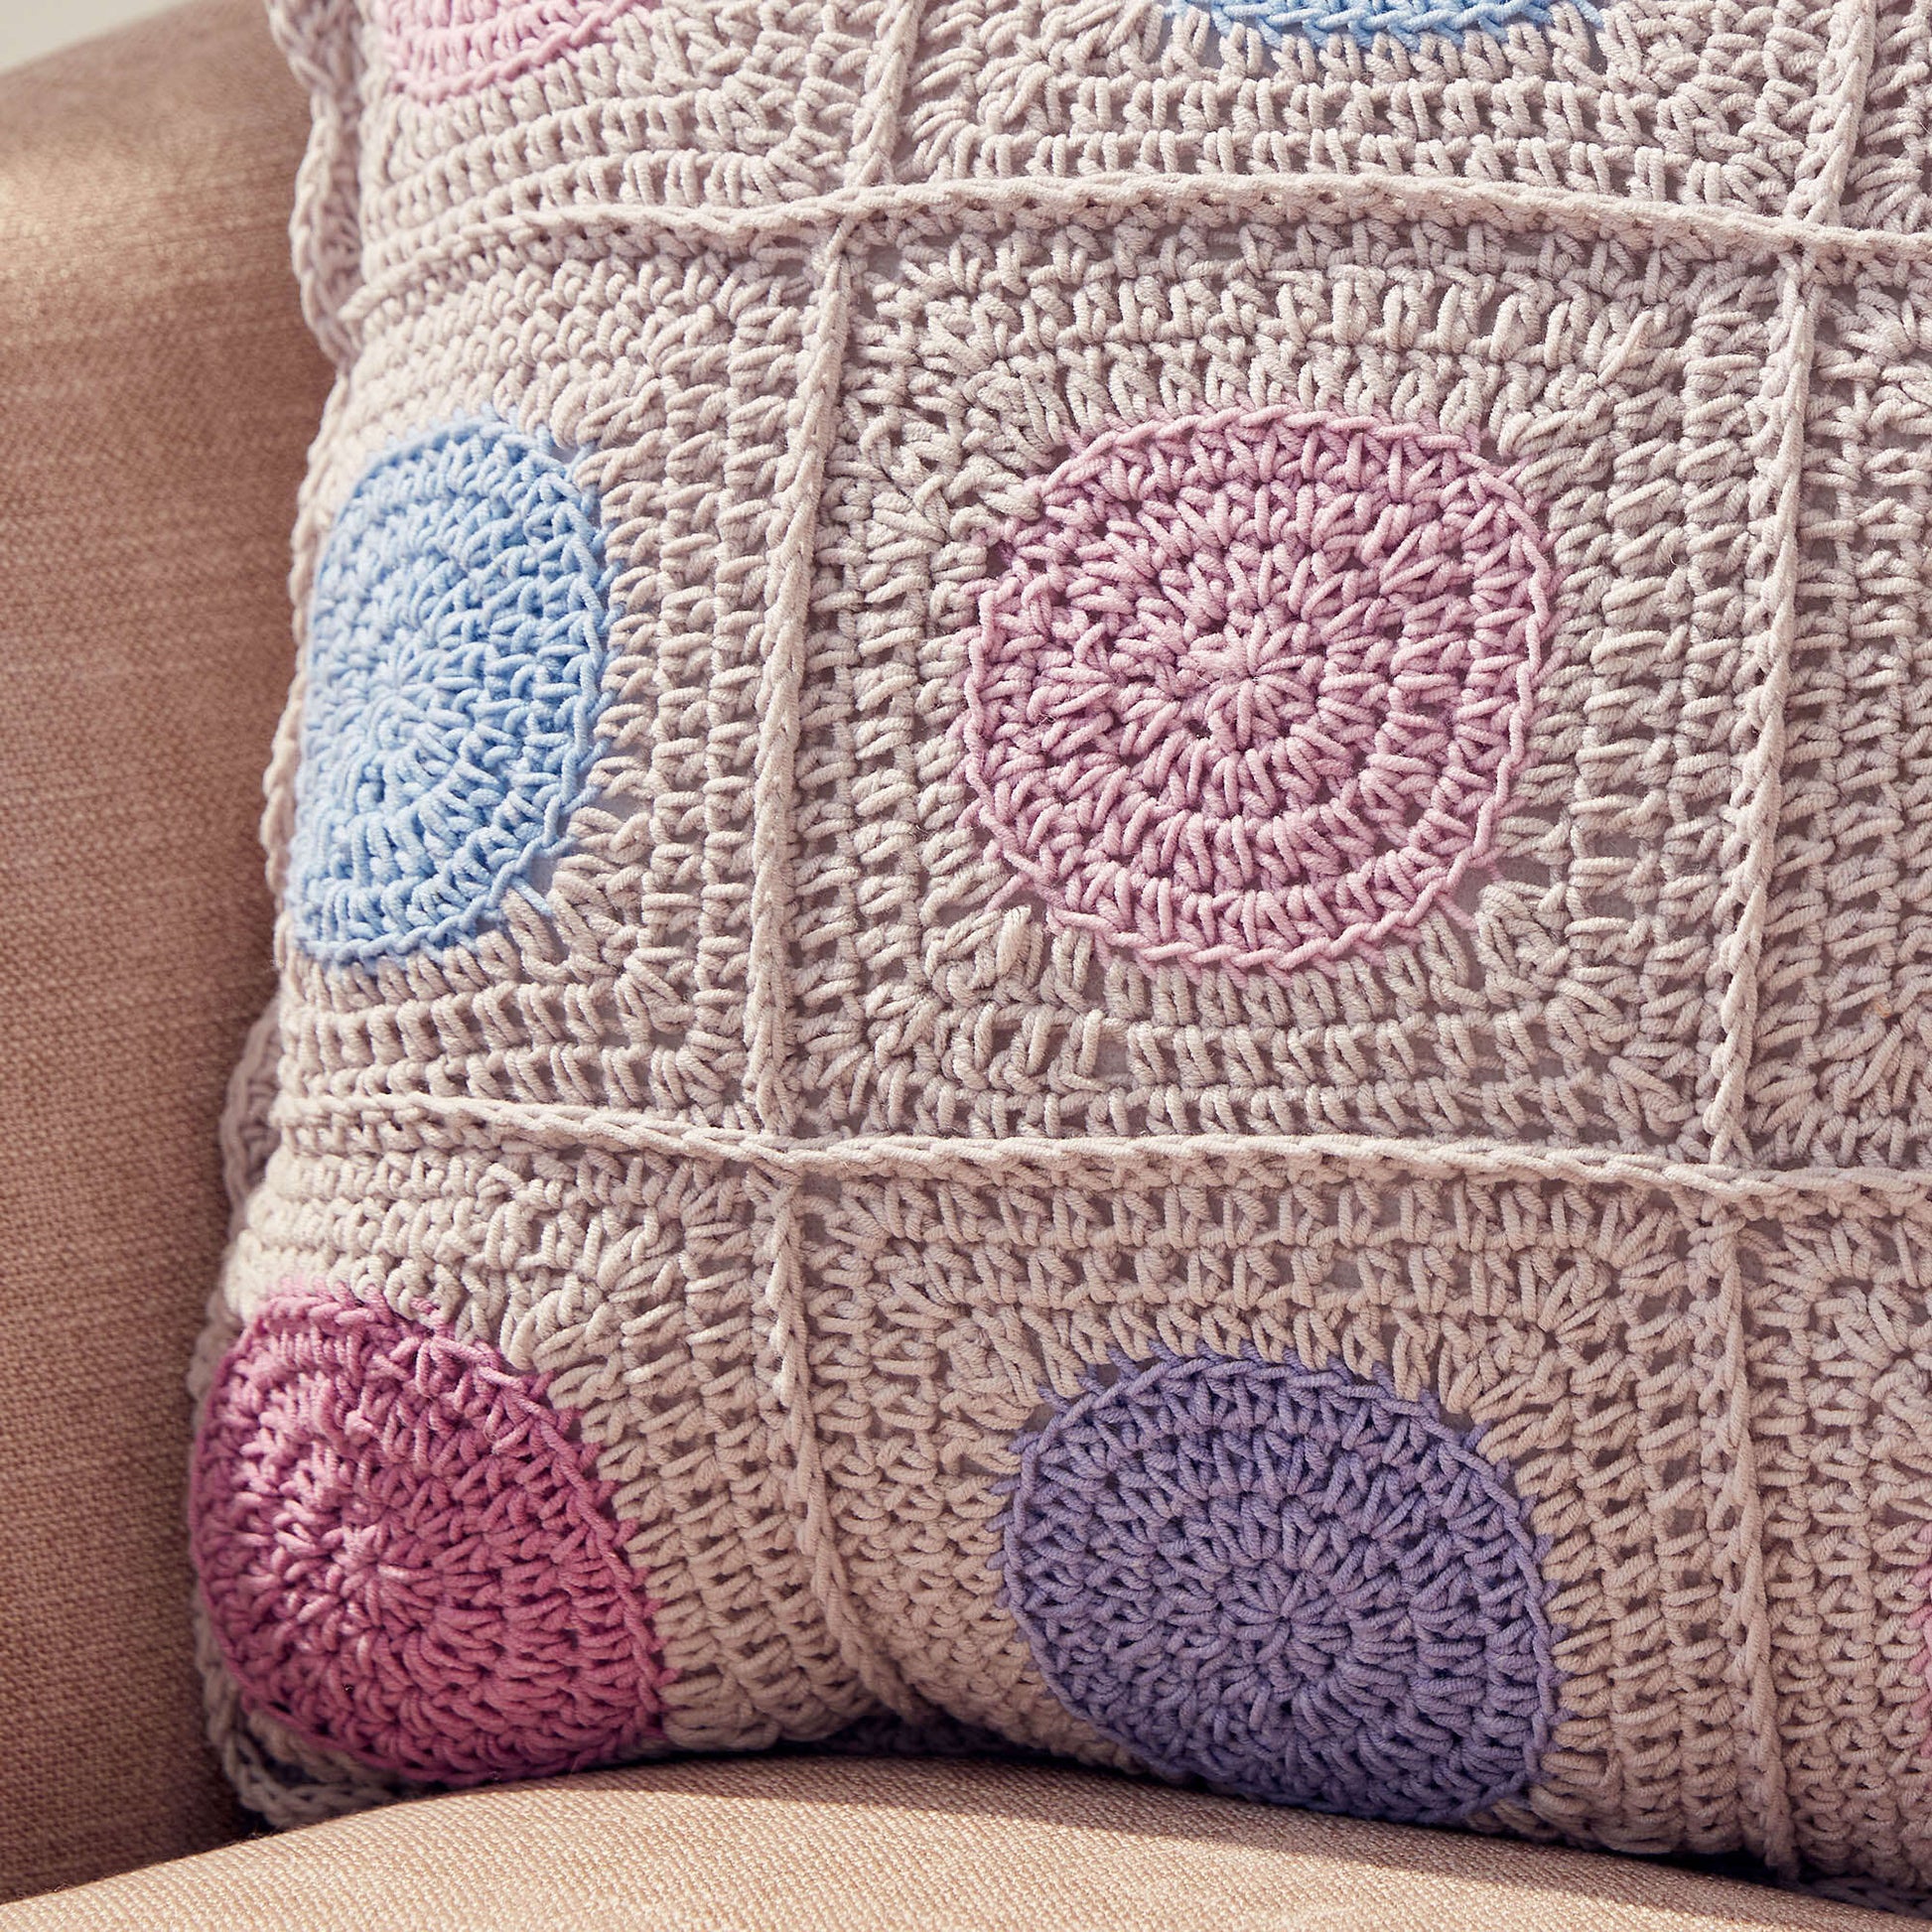 Free Caron Crochet Circle In Square Pillow Pattern